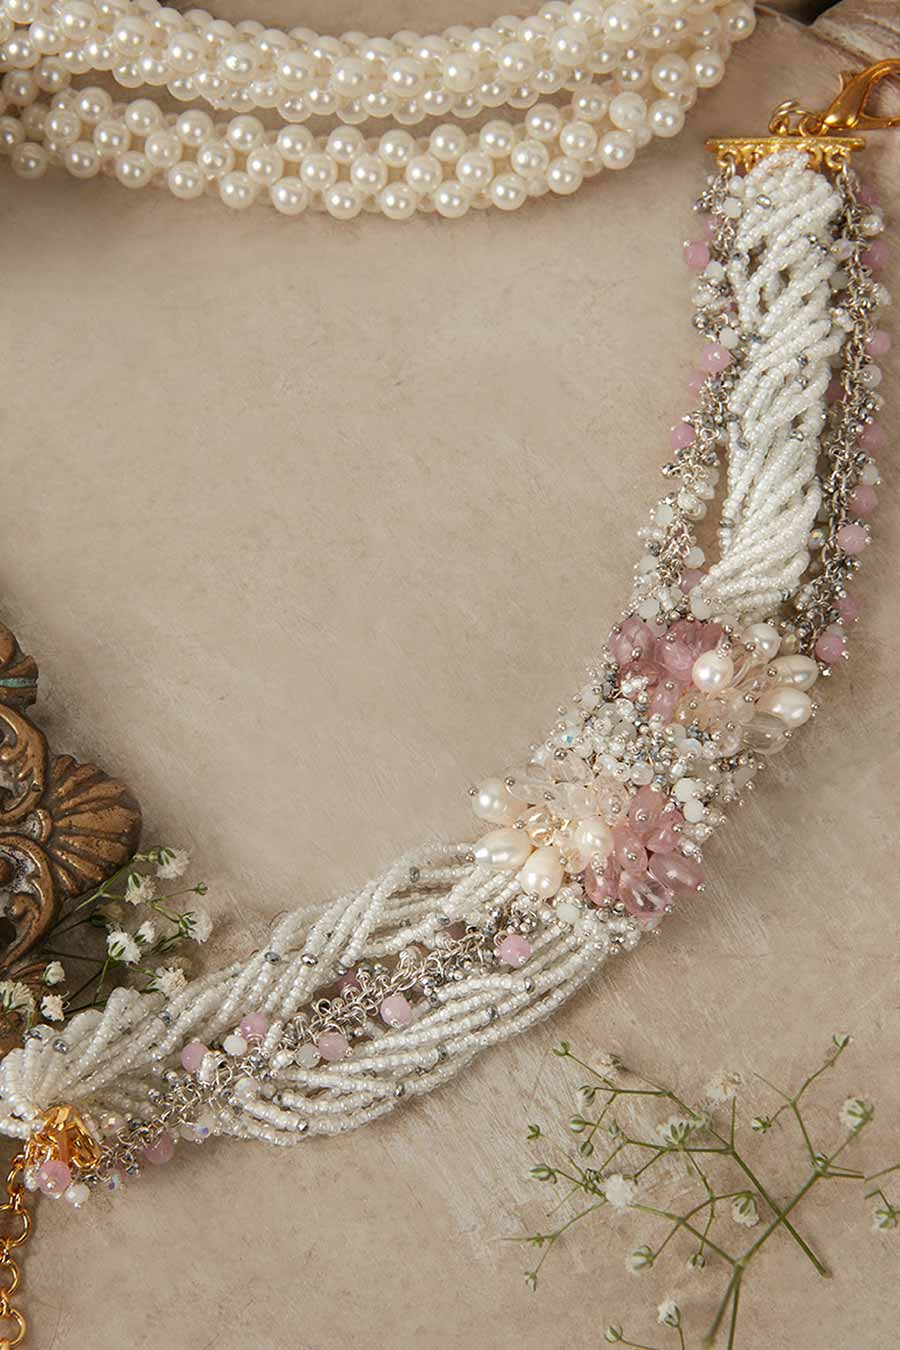 Pink Semi-Precious Stone Choker Necklace